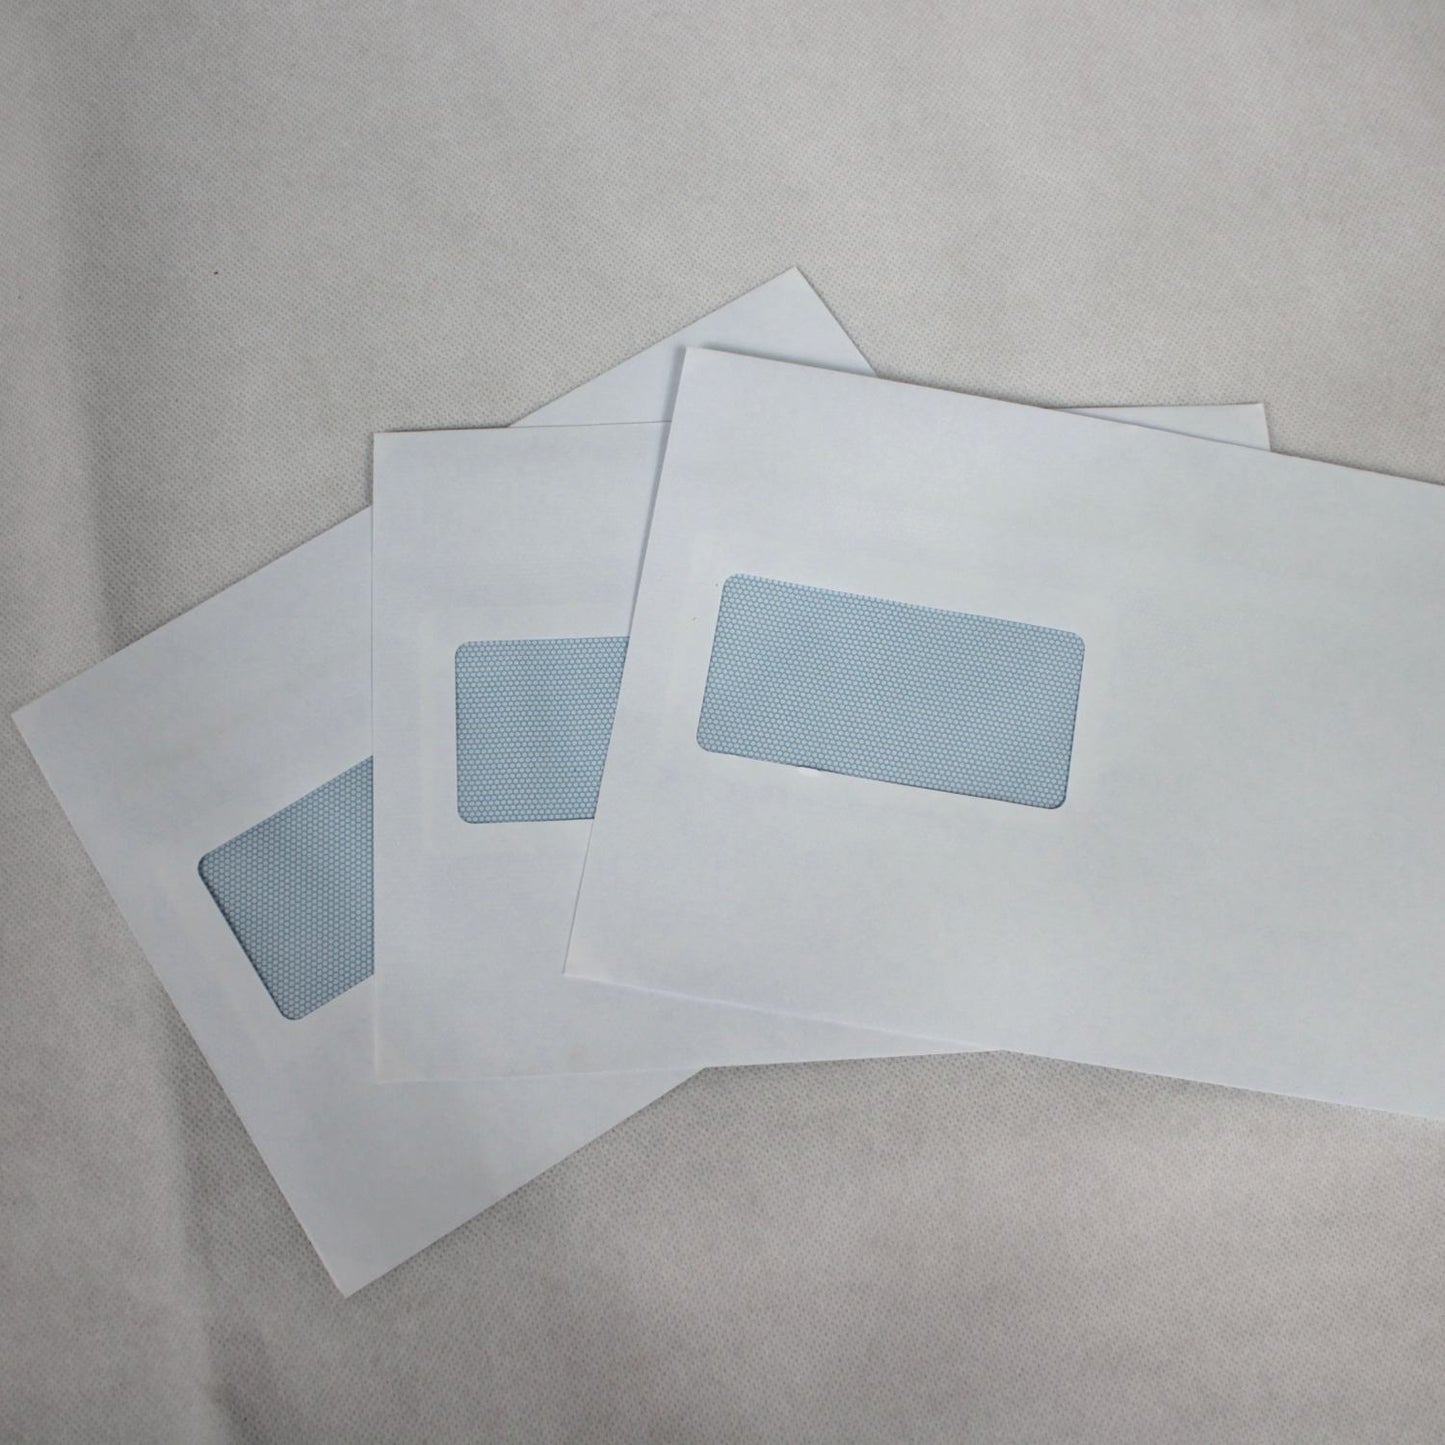 162x229mm C5 White Self Seal Envelopes (Window 45x90mm)